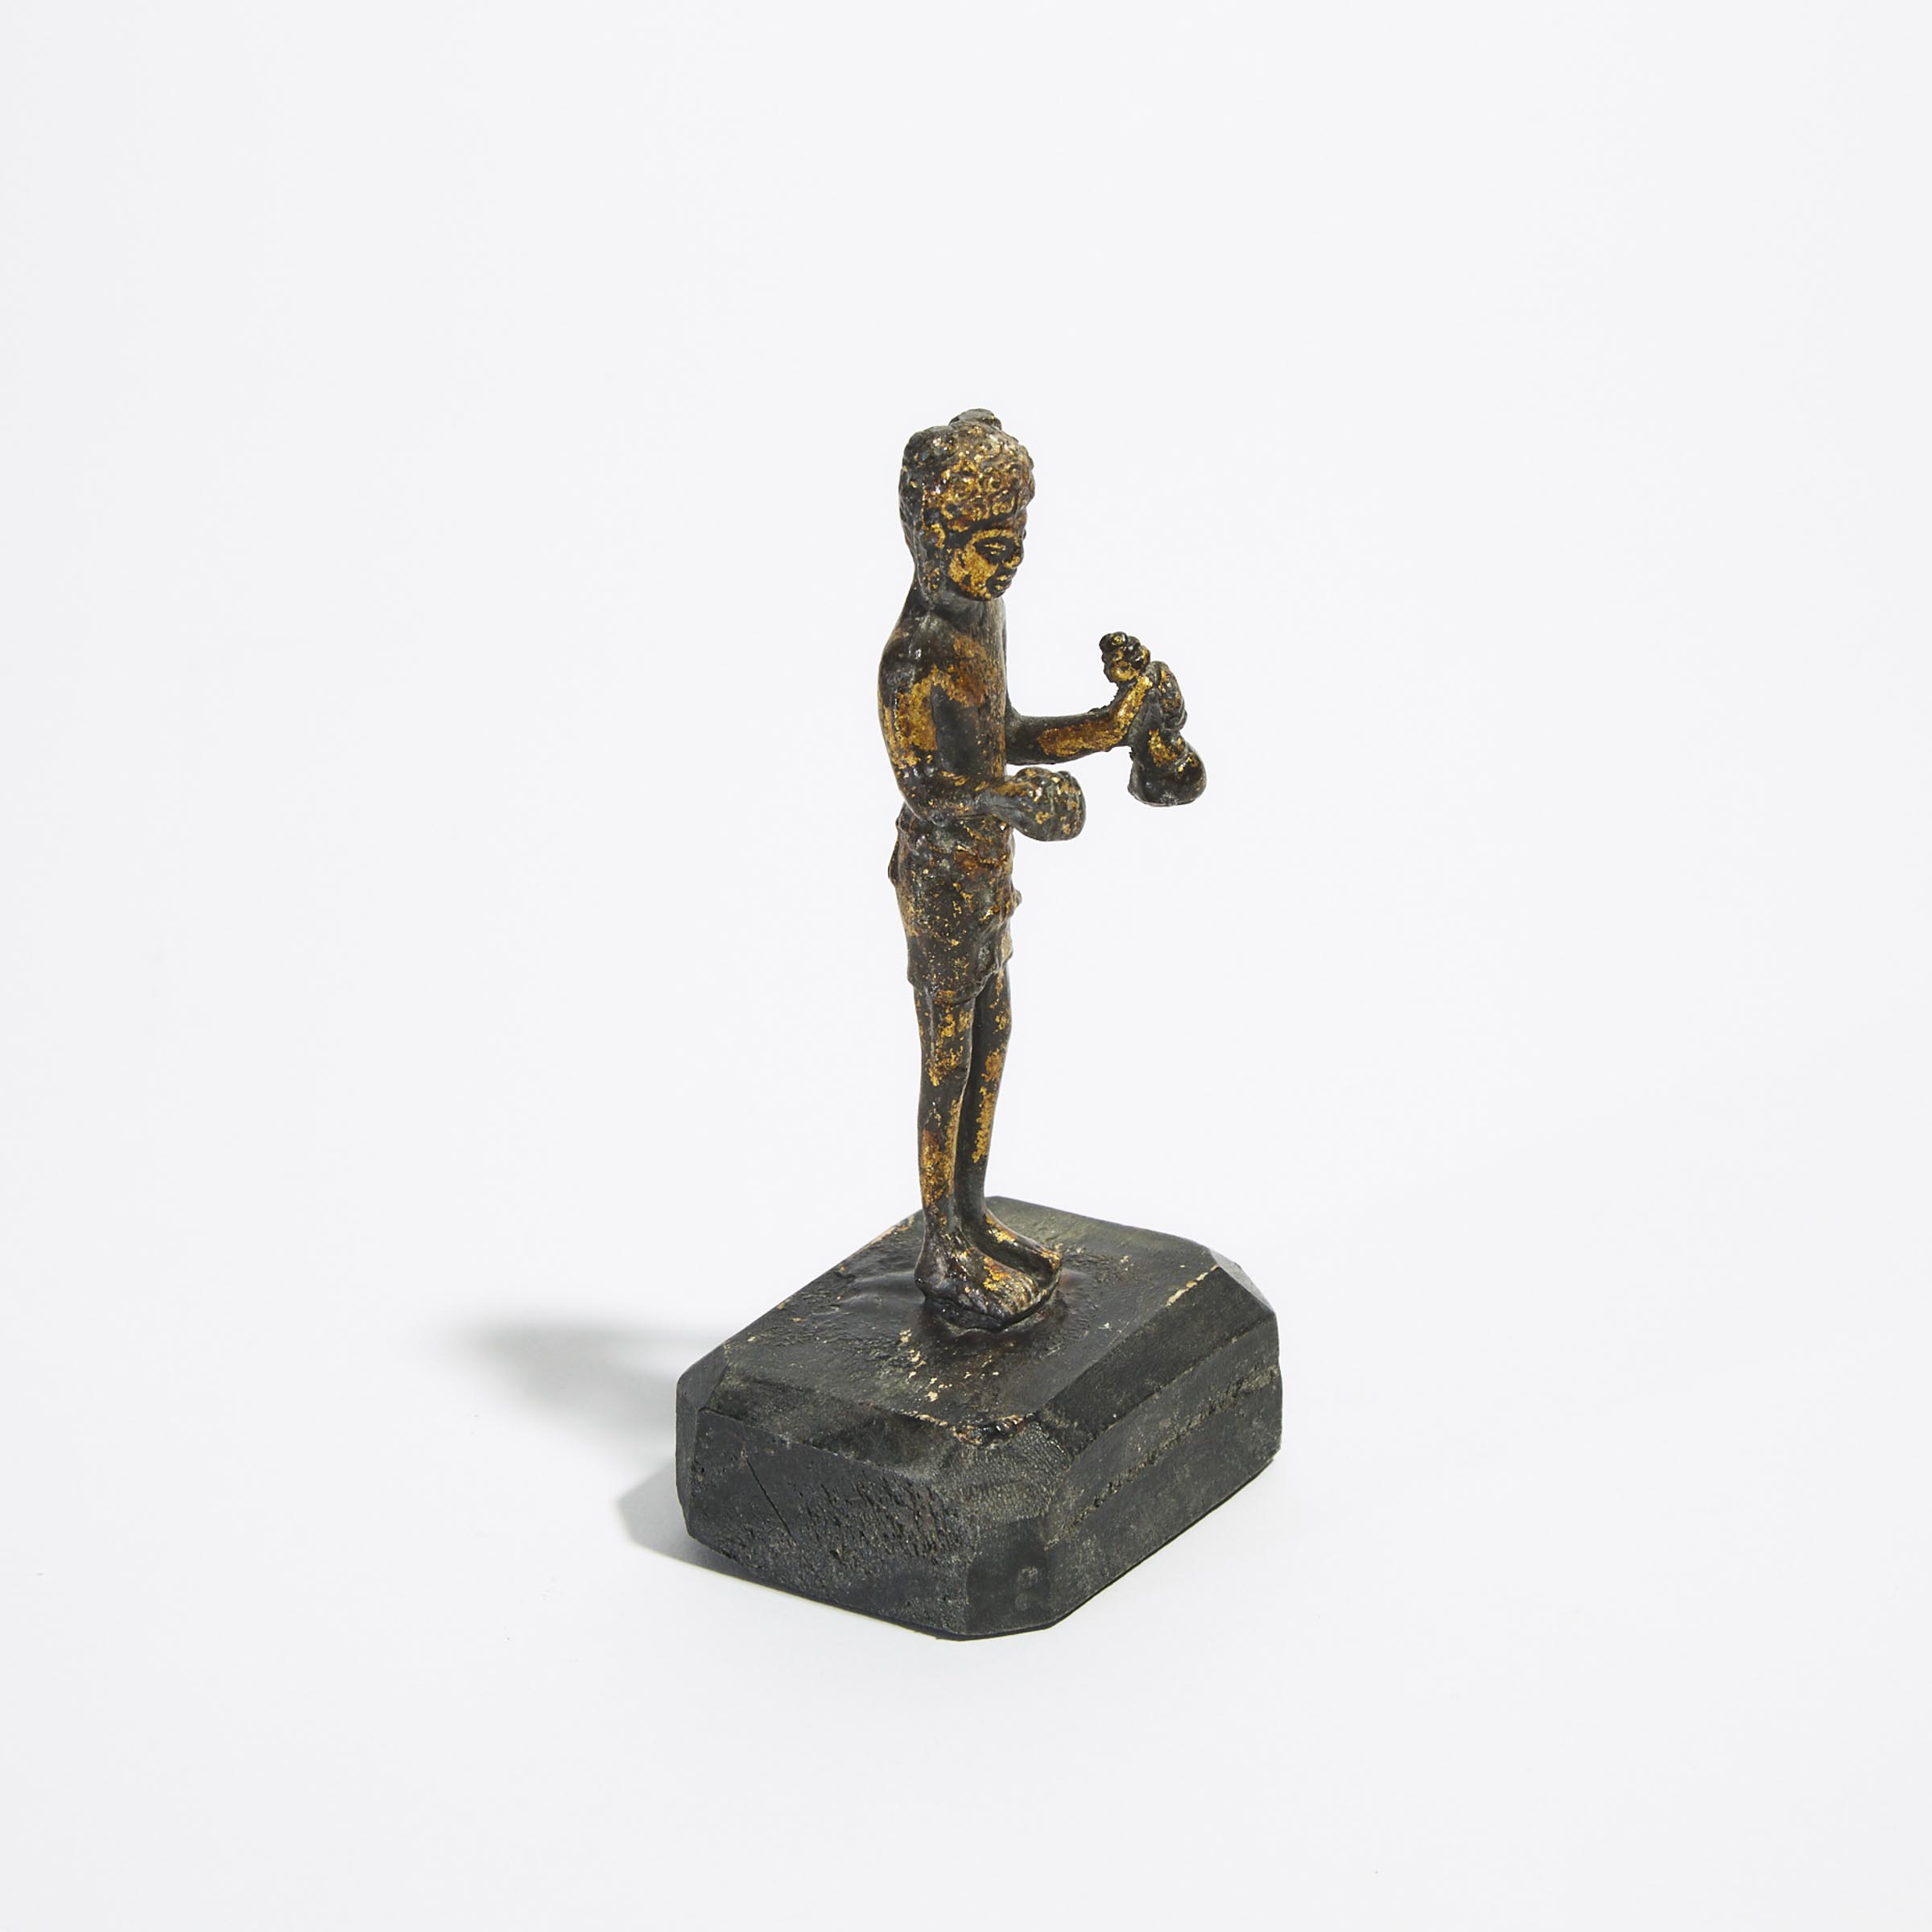 A Small Gilt Bronze Figure of Maitreya, Prakhon Chai Style, Thailand, 8th/9th Century